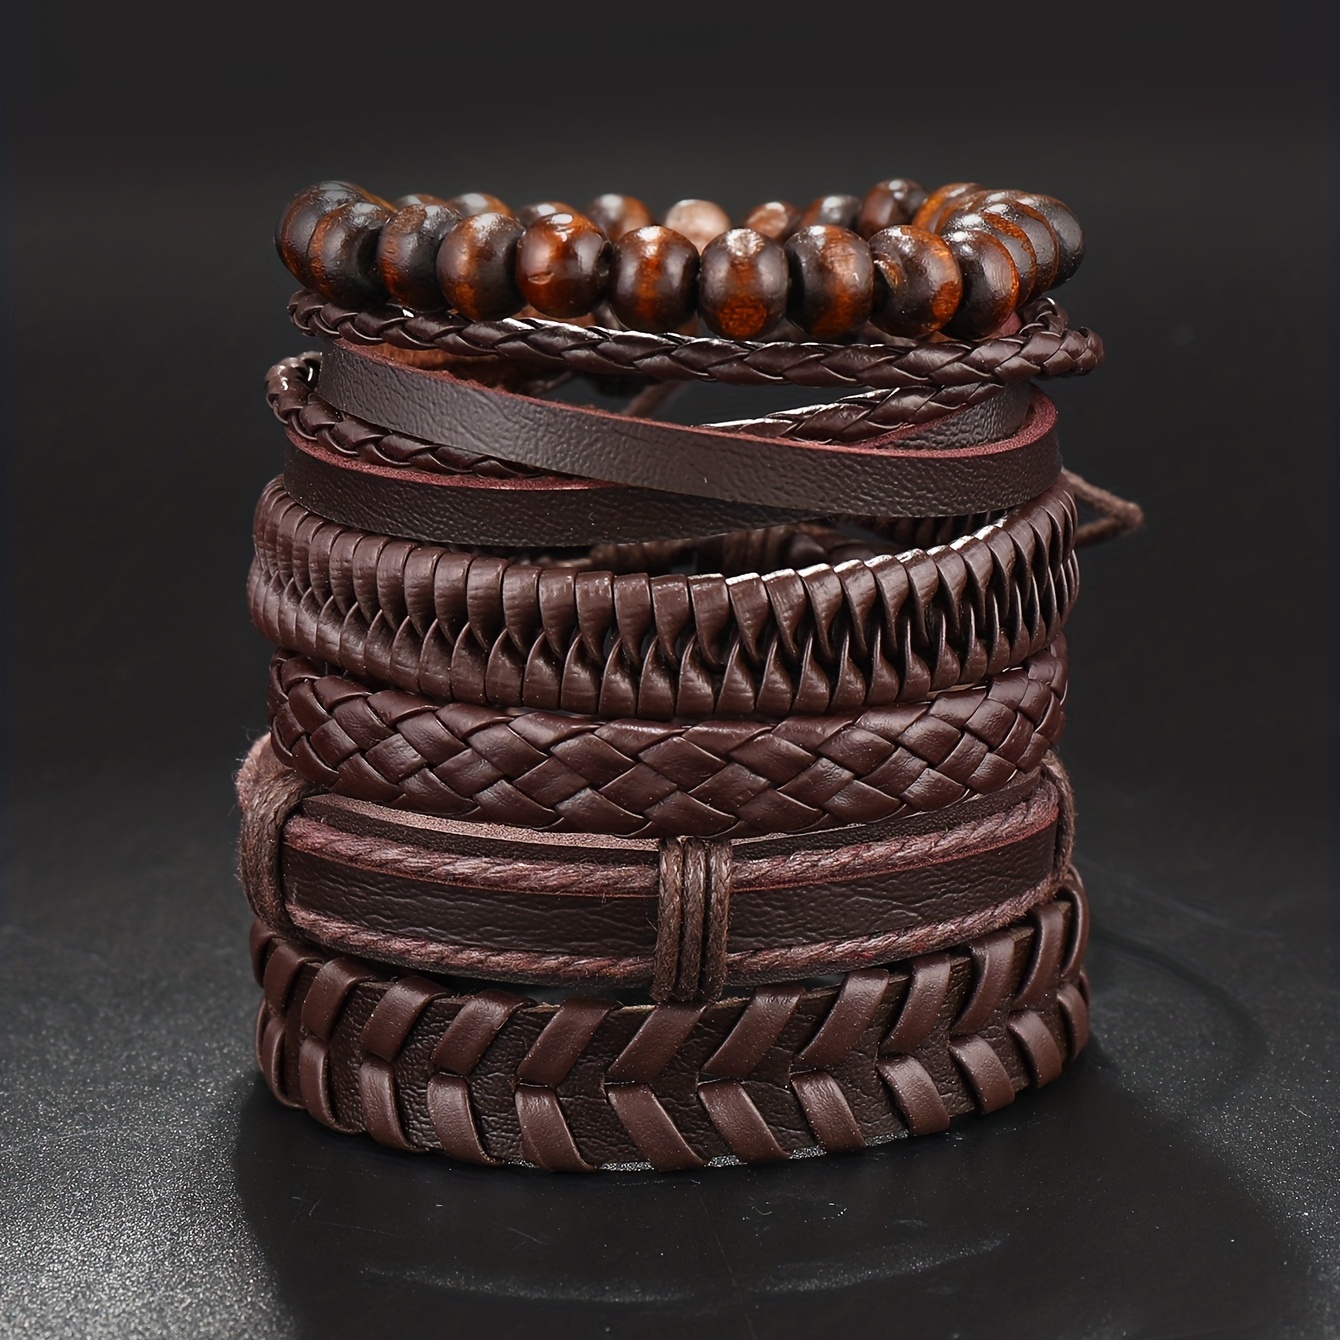 6pcs/set Fashionable Pu Leather Men's Bracelet Jewelry